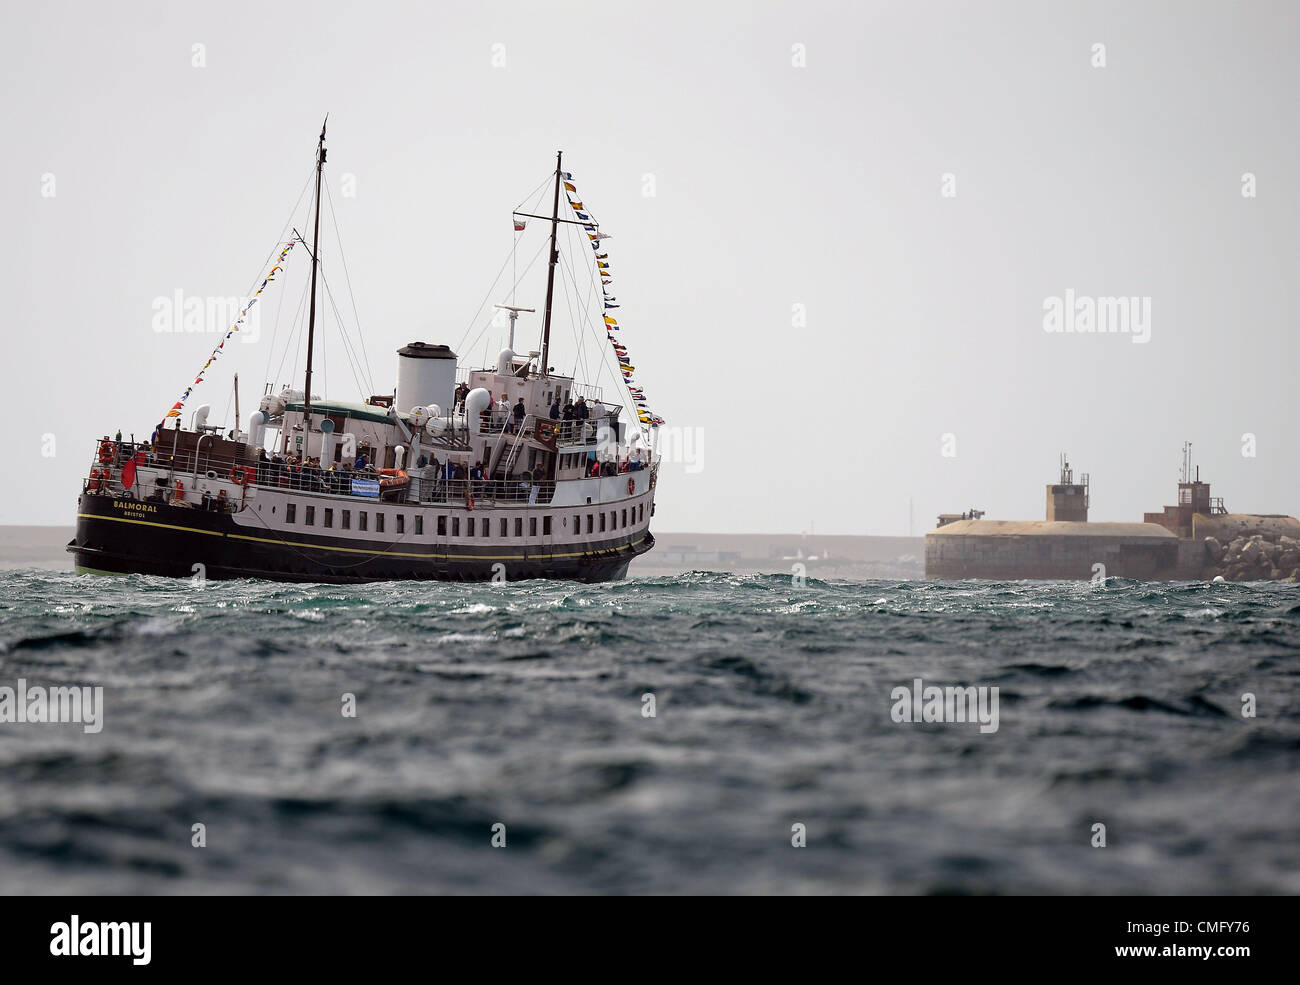 Klassisches Kreuzfahrtschiff Balmoral 4. August 2012 Bild: DORSET MEDIA SERVICE Stockfoto